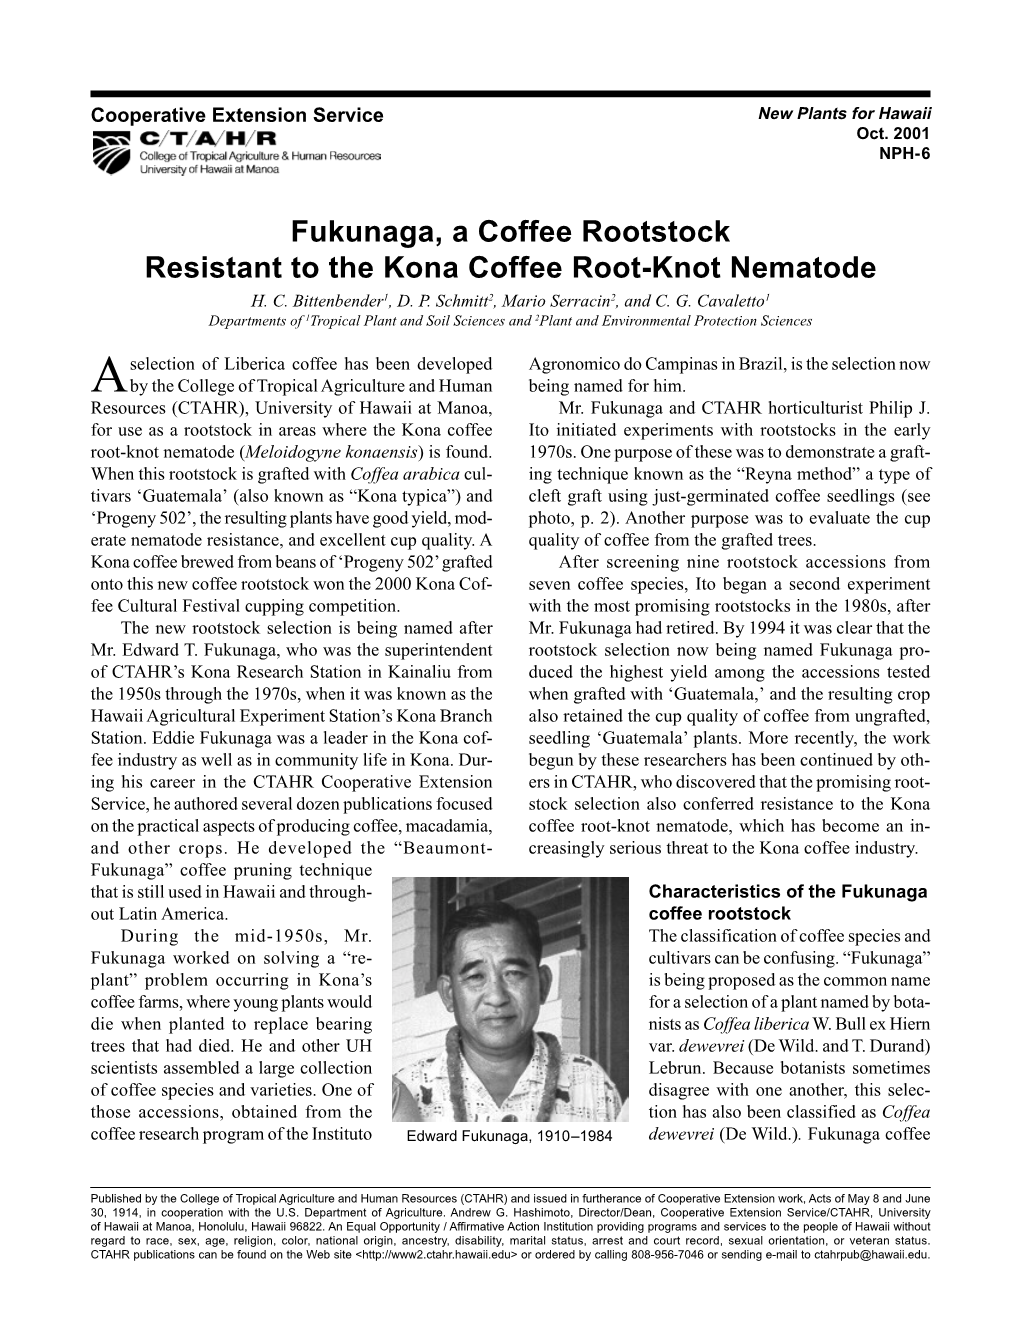 Fukunaga, a Coffee Rootstock Resistant to the Kona Coffee Root-Knot Nematode H